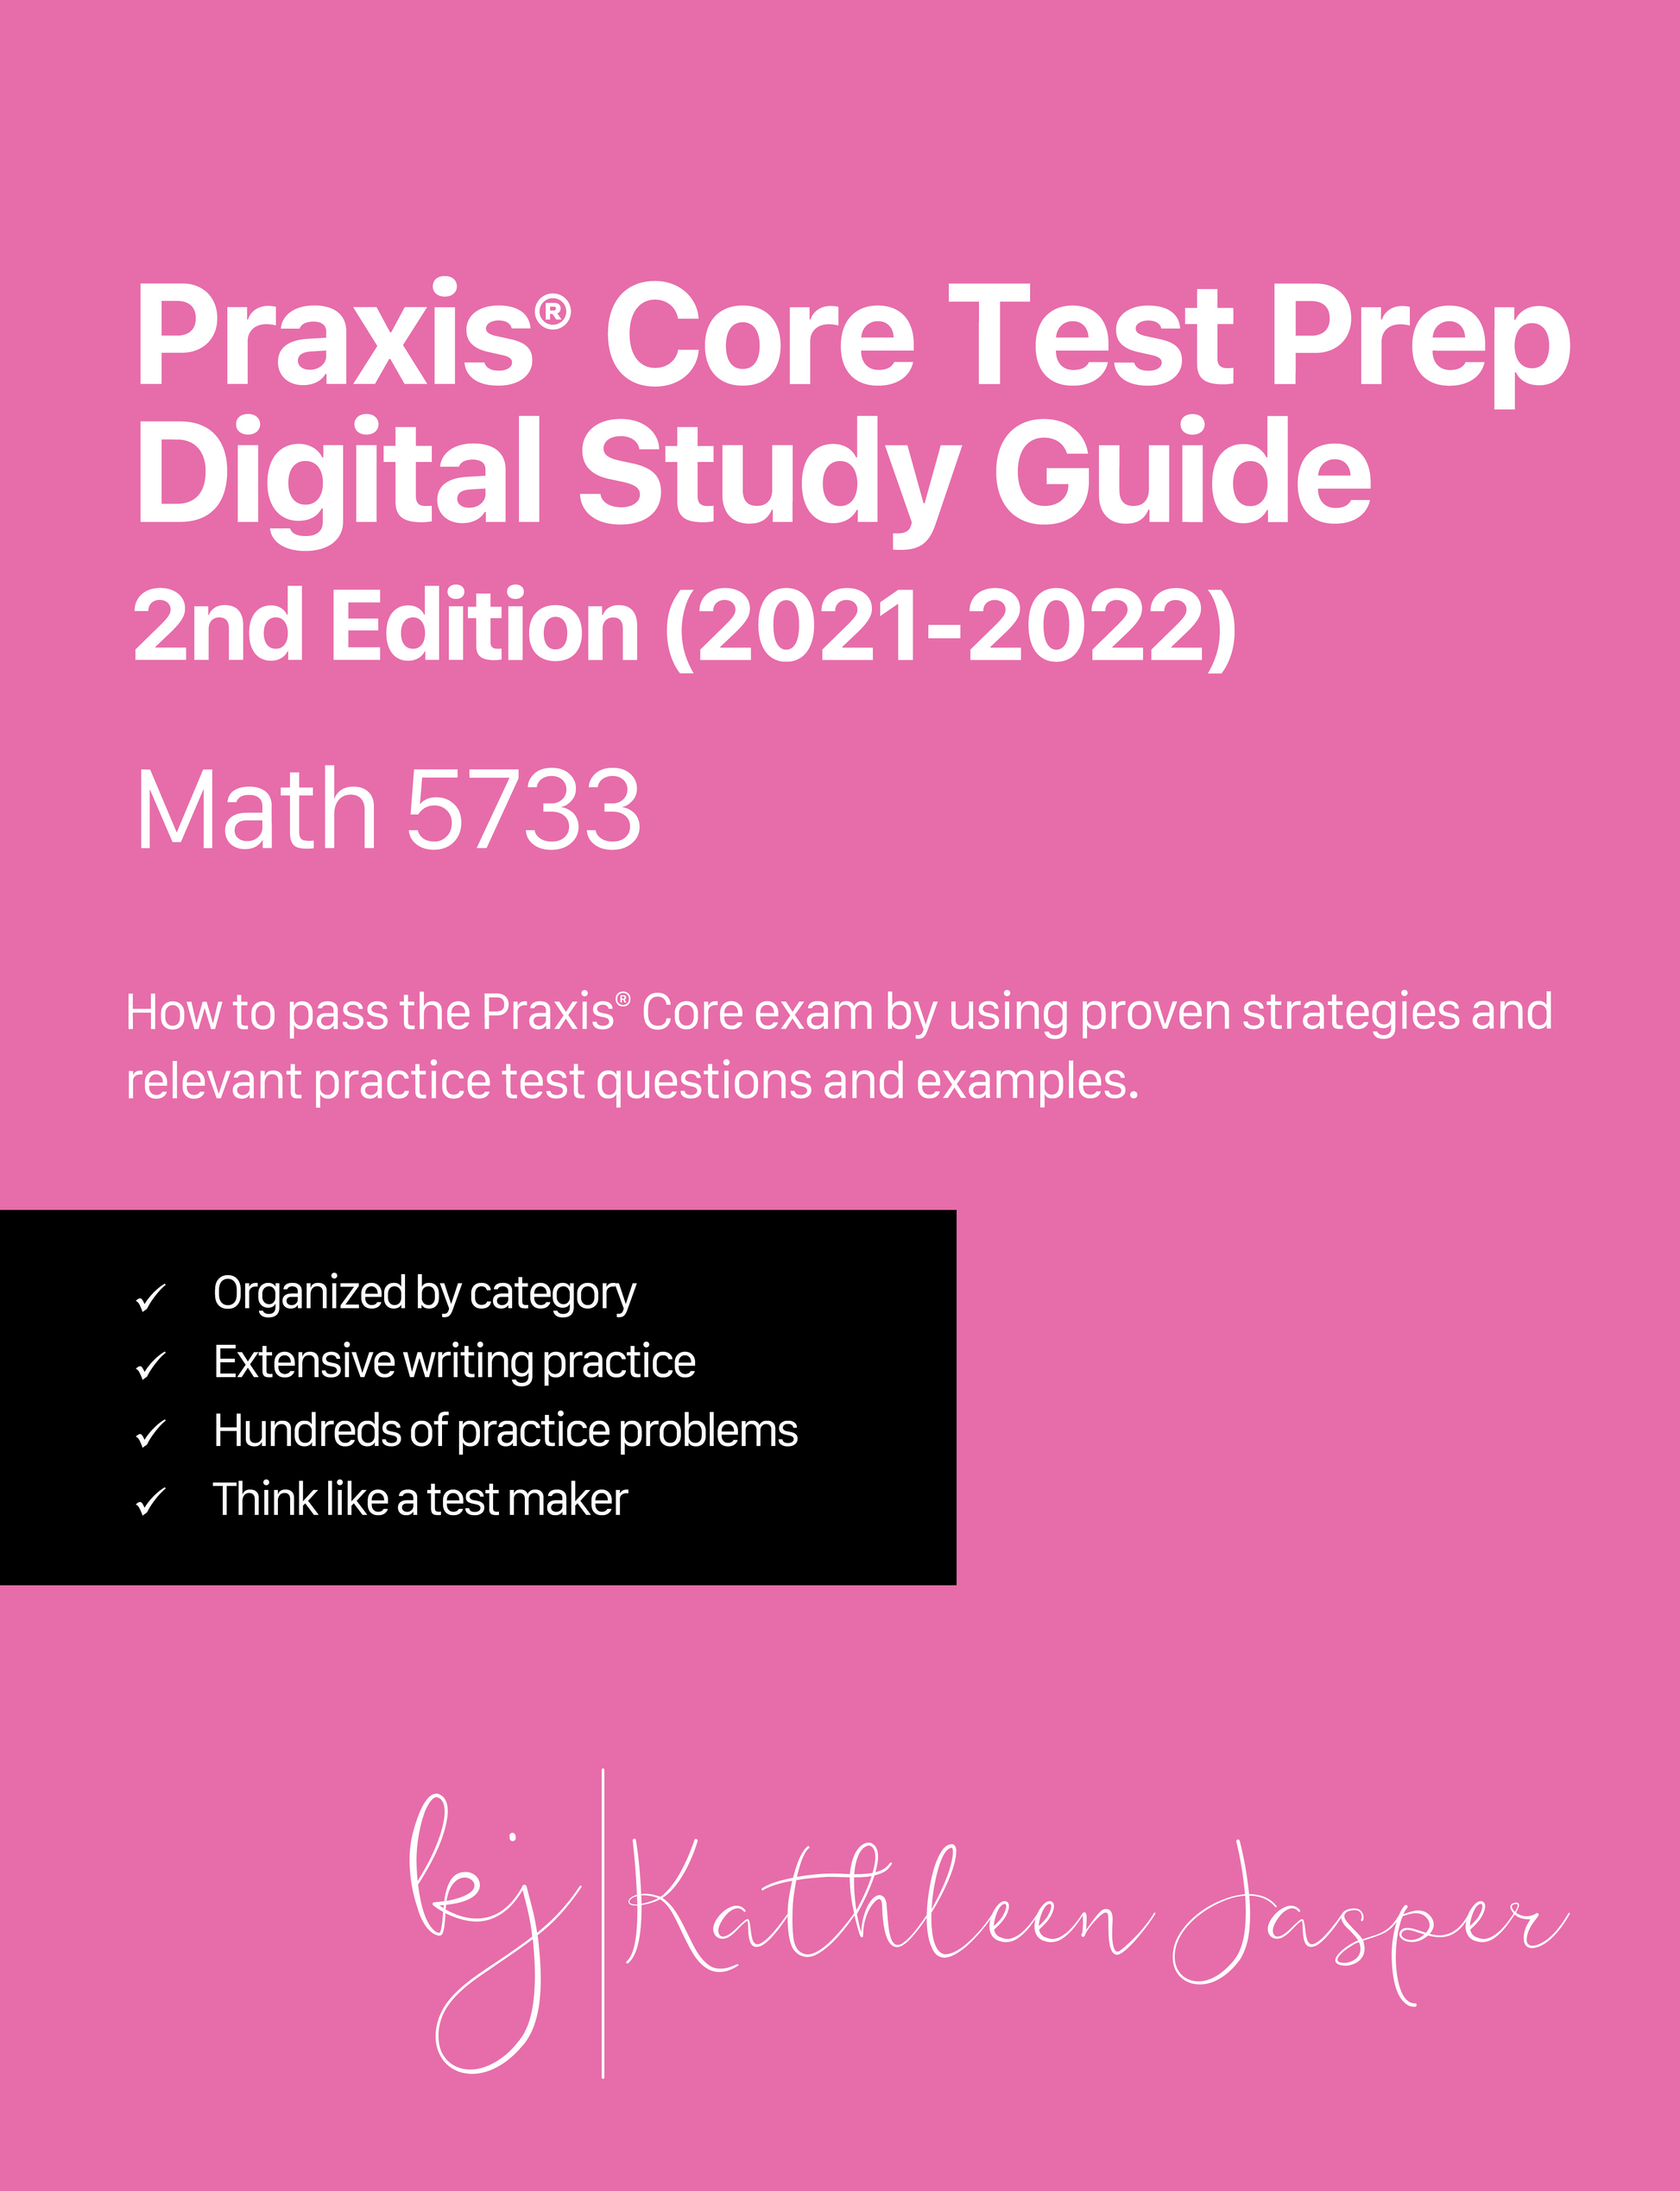 Praxis core test prep digital study guide 2nd edition math 5733